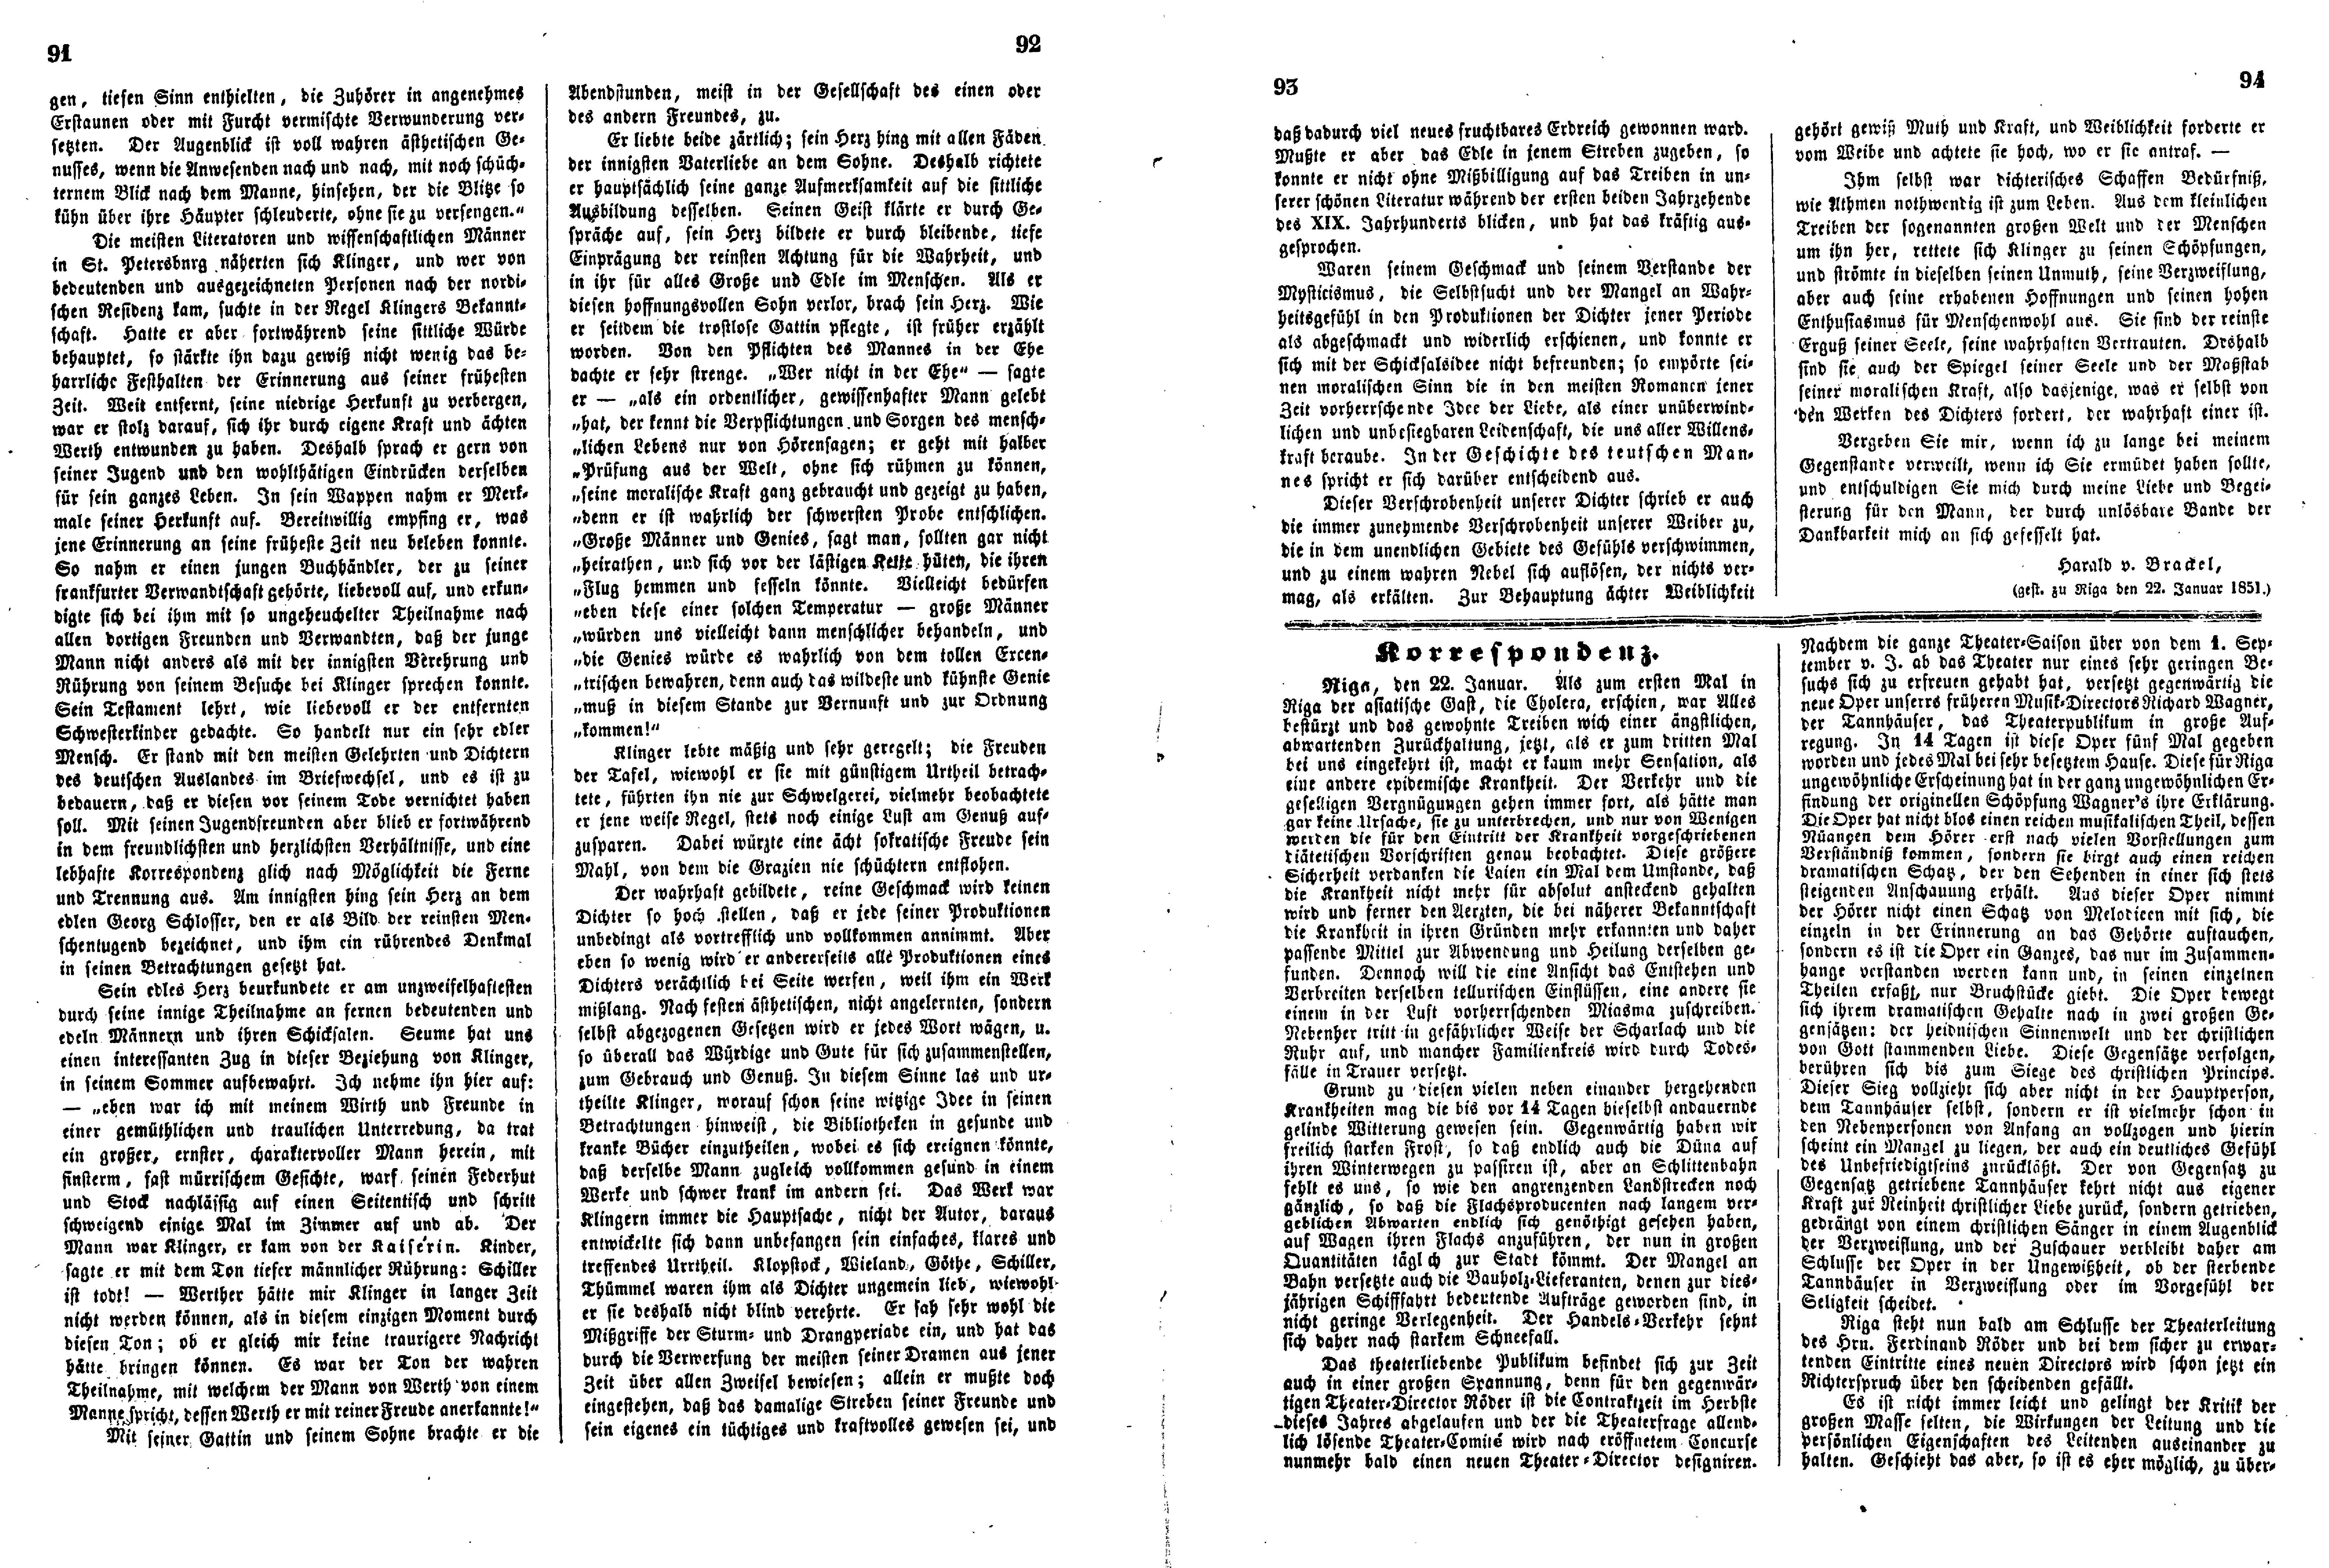 Das Inland [18] (1853) | 33. (91-94) Main body of text